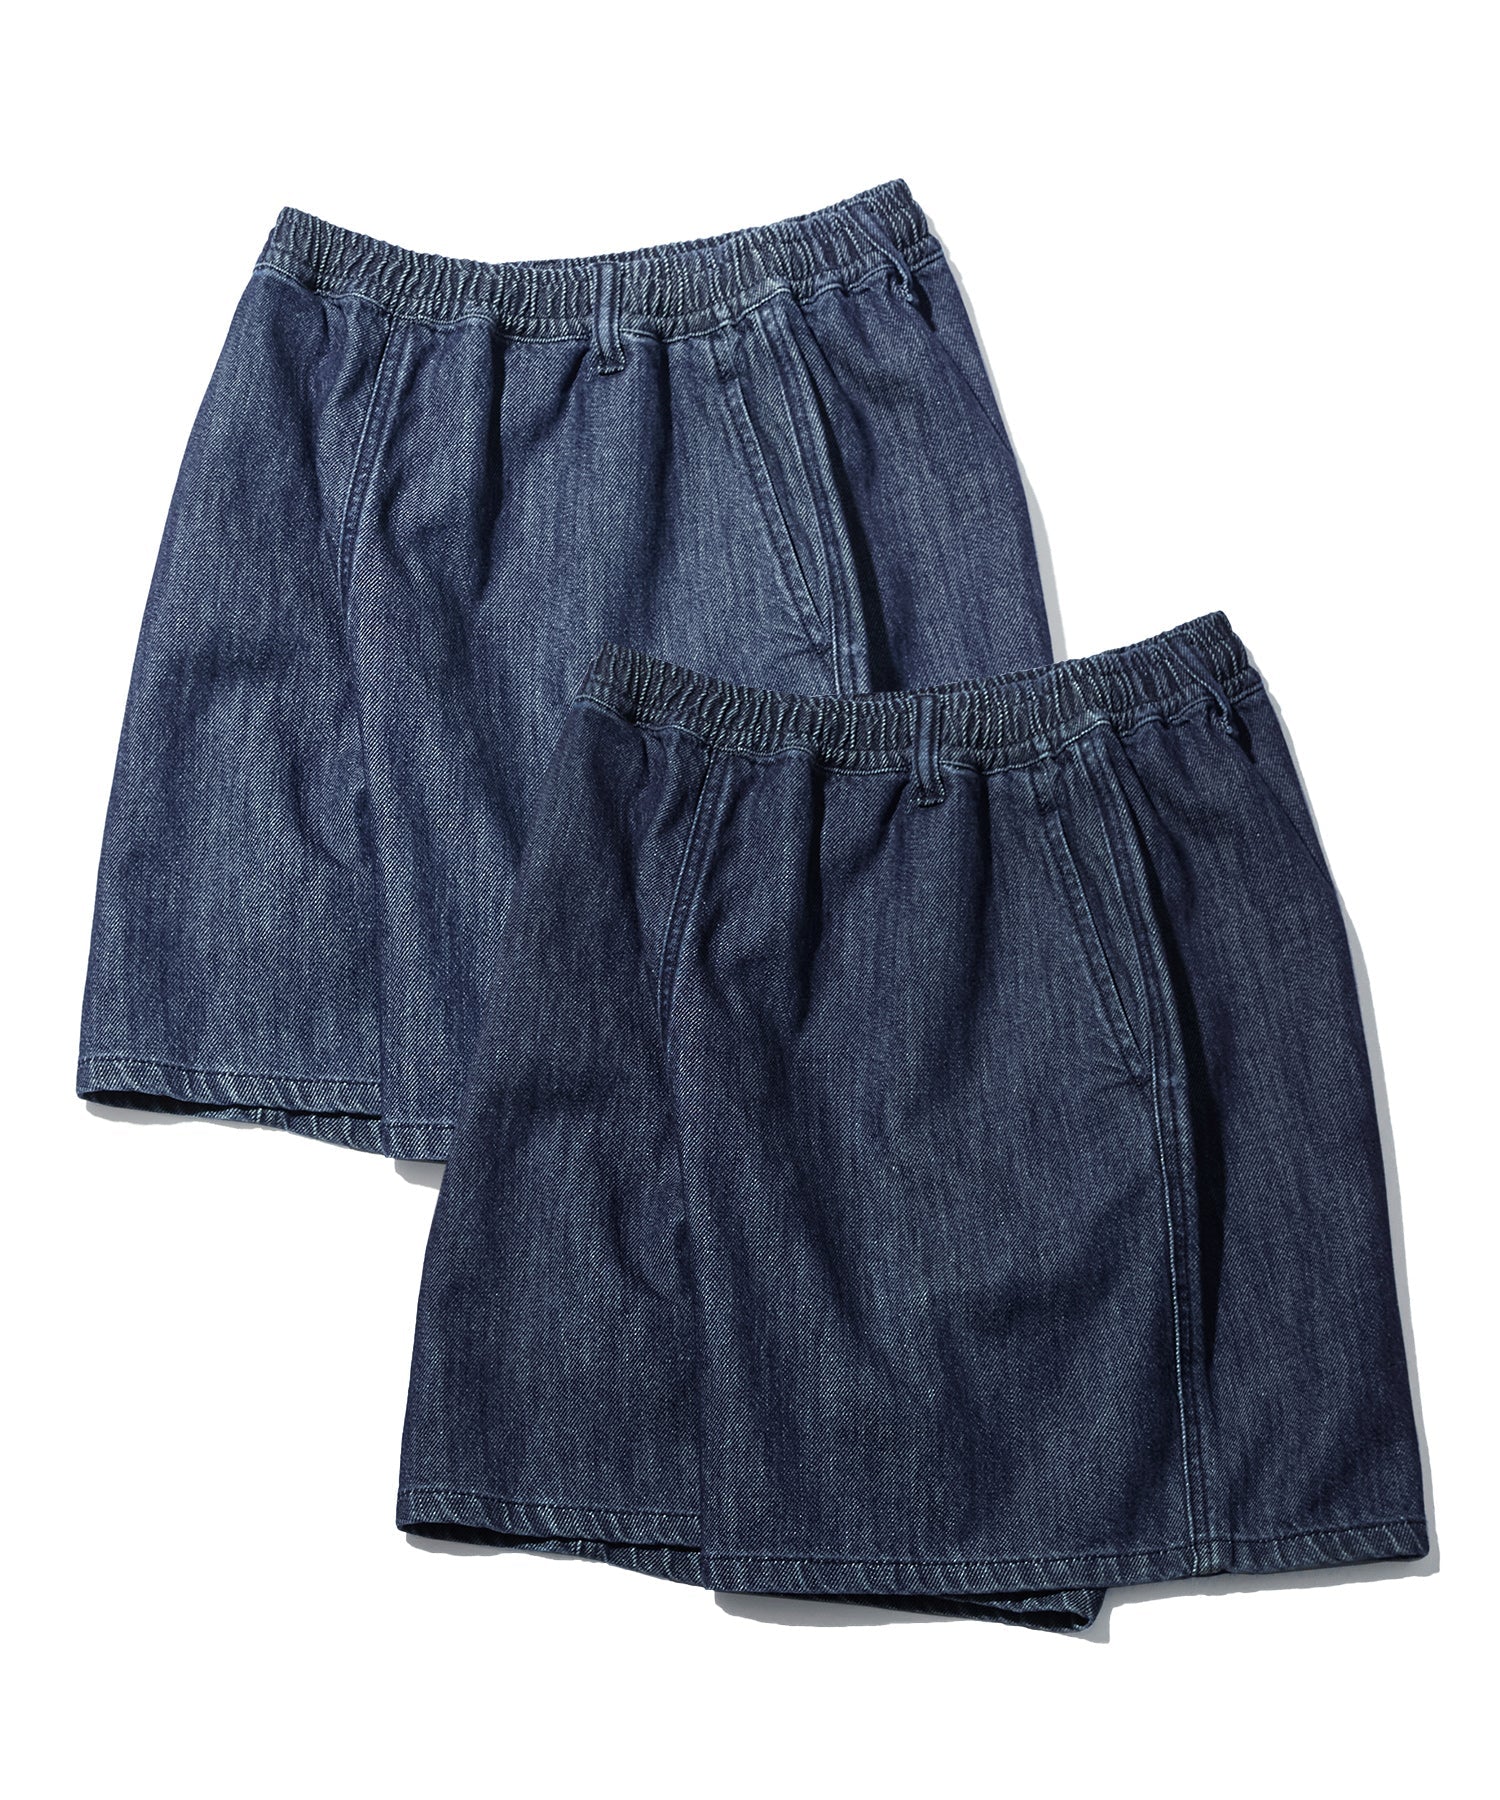 [Summer] CGP Similar Linen Banding Denim Shorts